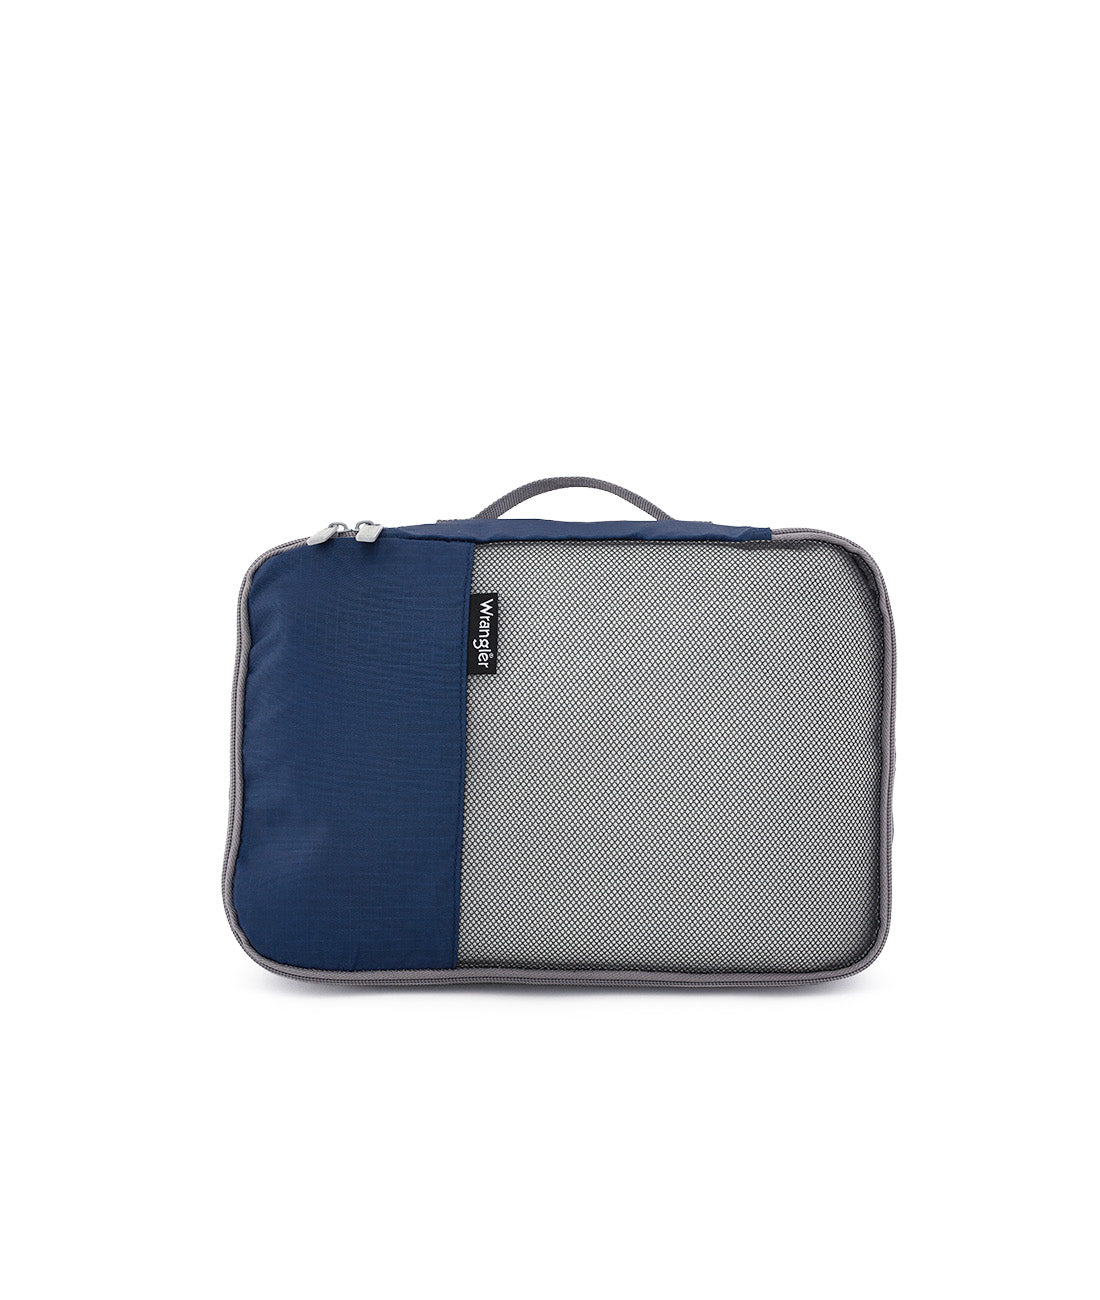 Wrangler | Cameron Collection | 4PC Trunk Luggage Set